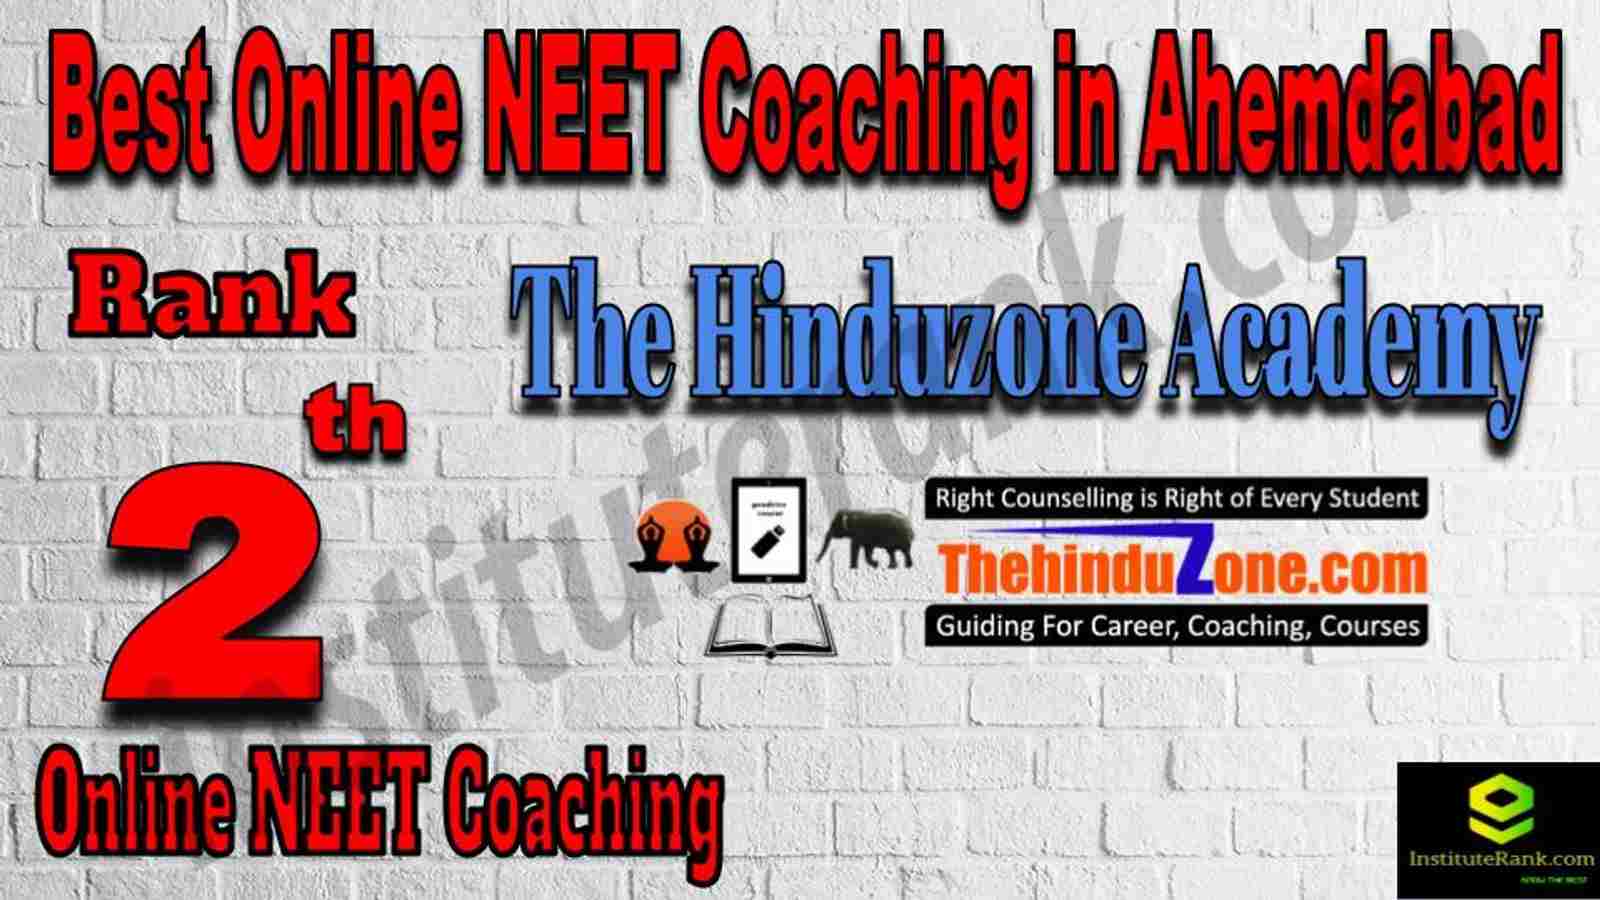 Rank 2 Best Online NEET Coaching in Ahmedabad